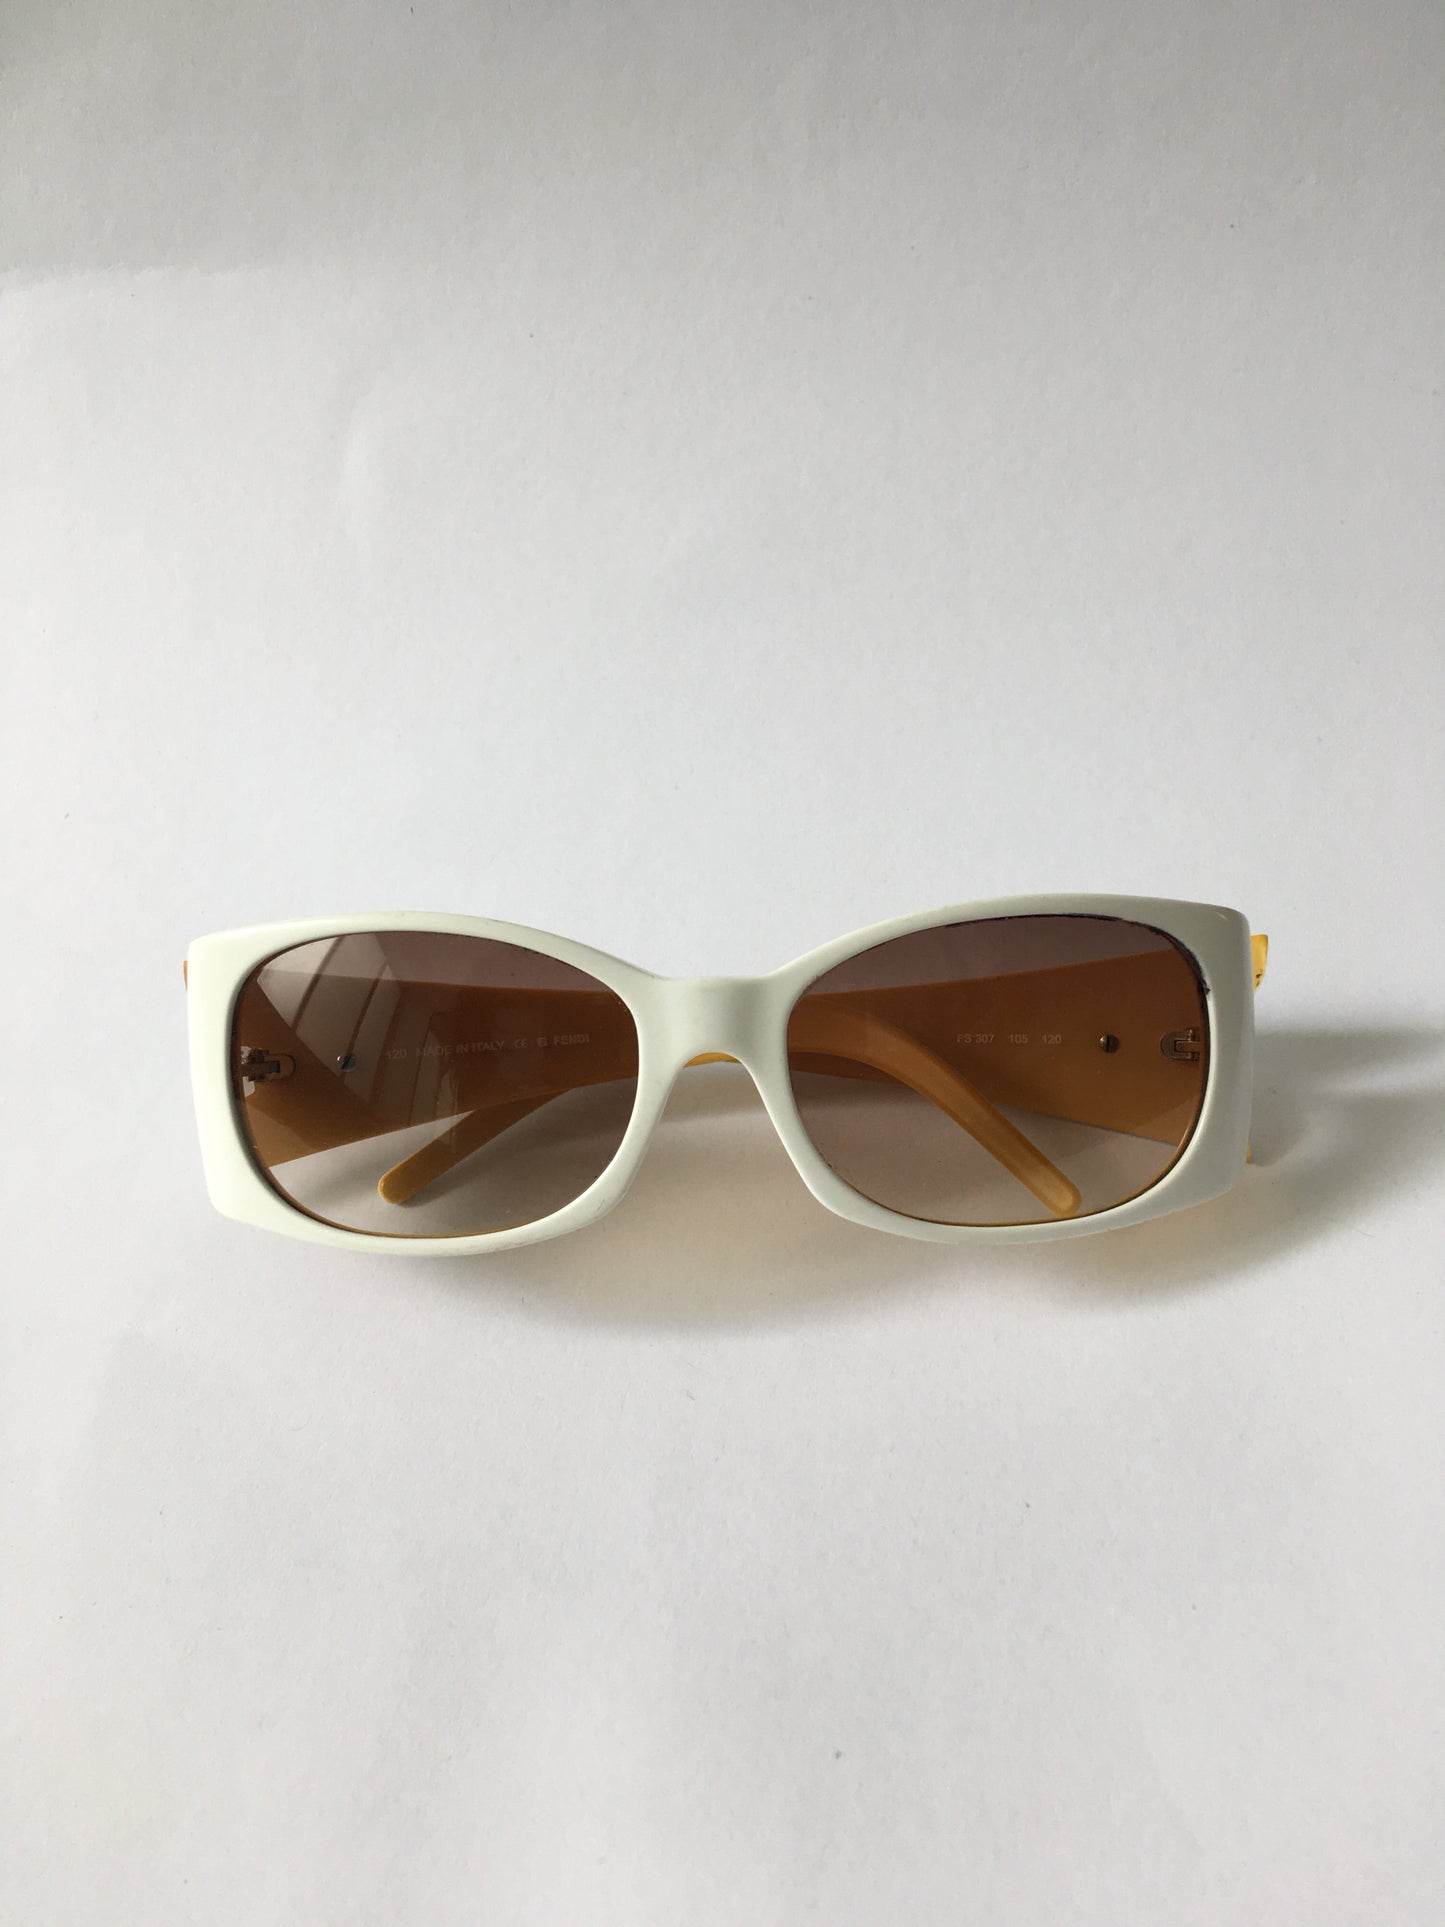 Fendi 90s sunglasses